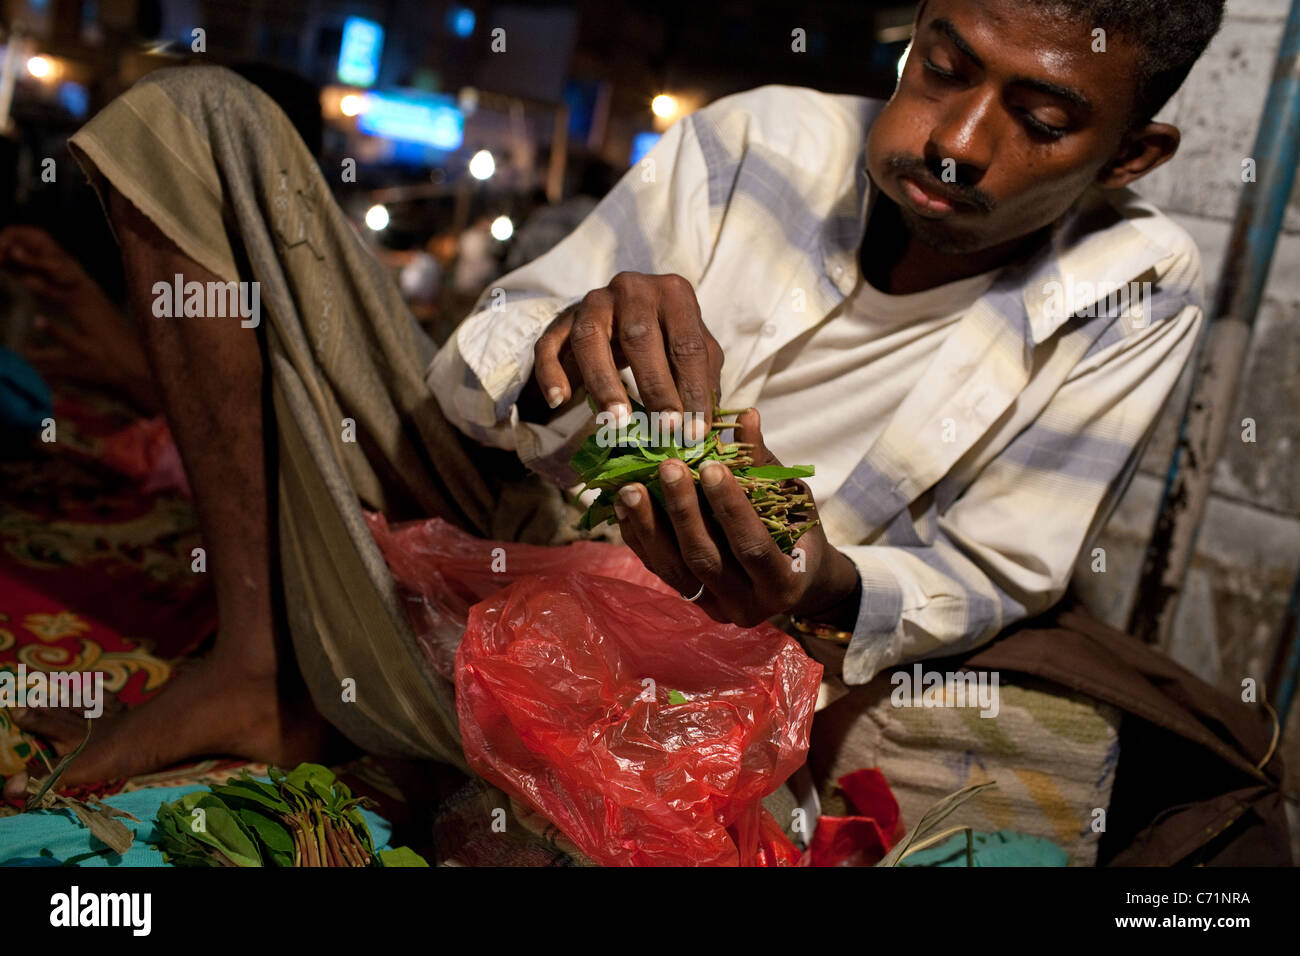 A man chews and sells khat (qat) at the night khat market in Aden, Yemen. Stock Photo